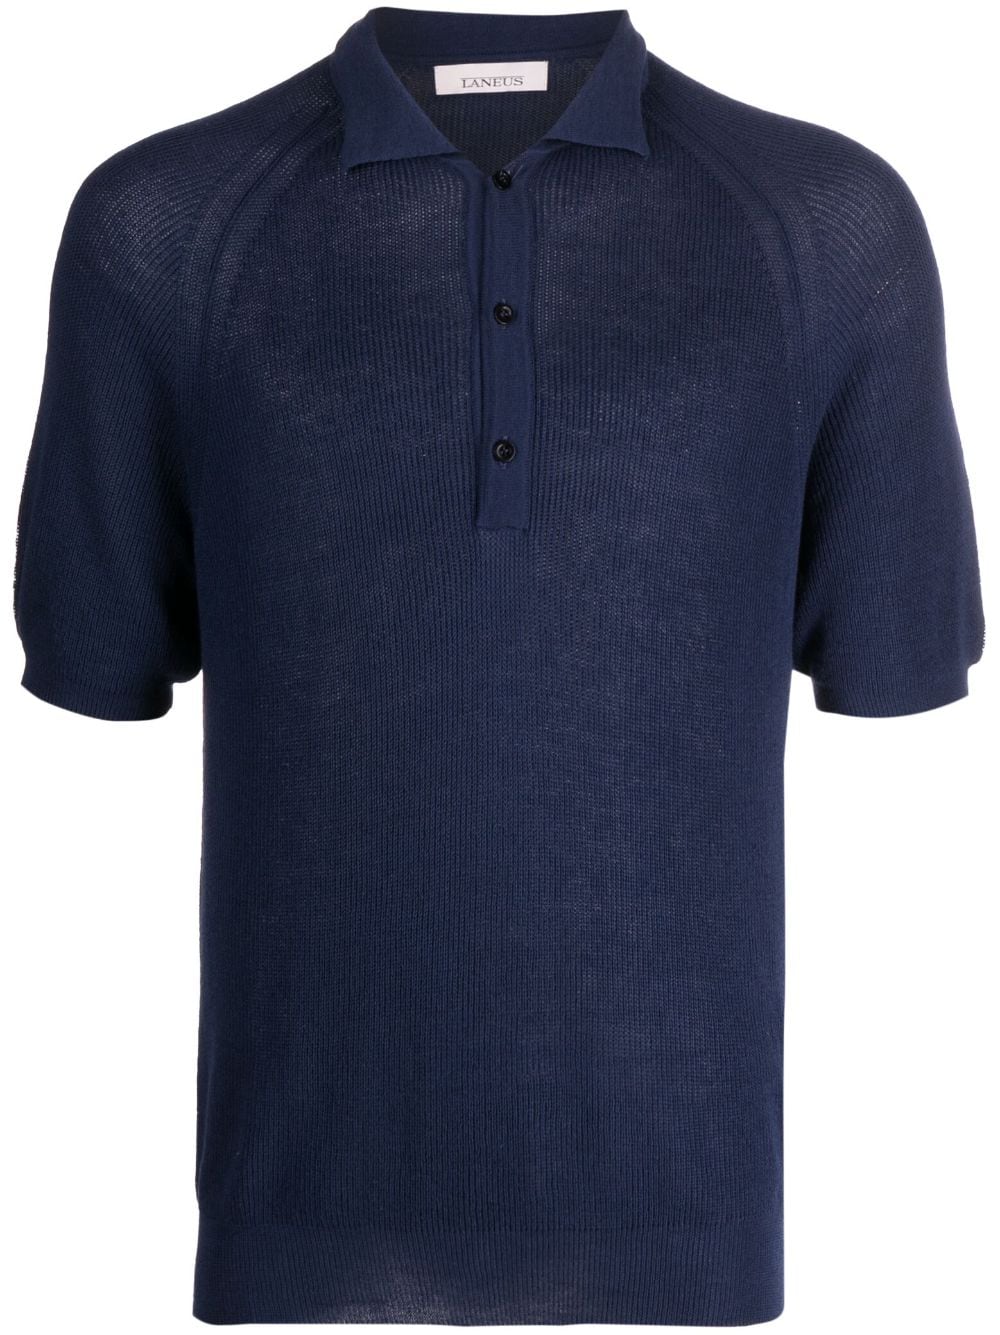 Laneus Knitted Polo Shirt - Farfetch